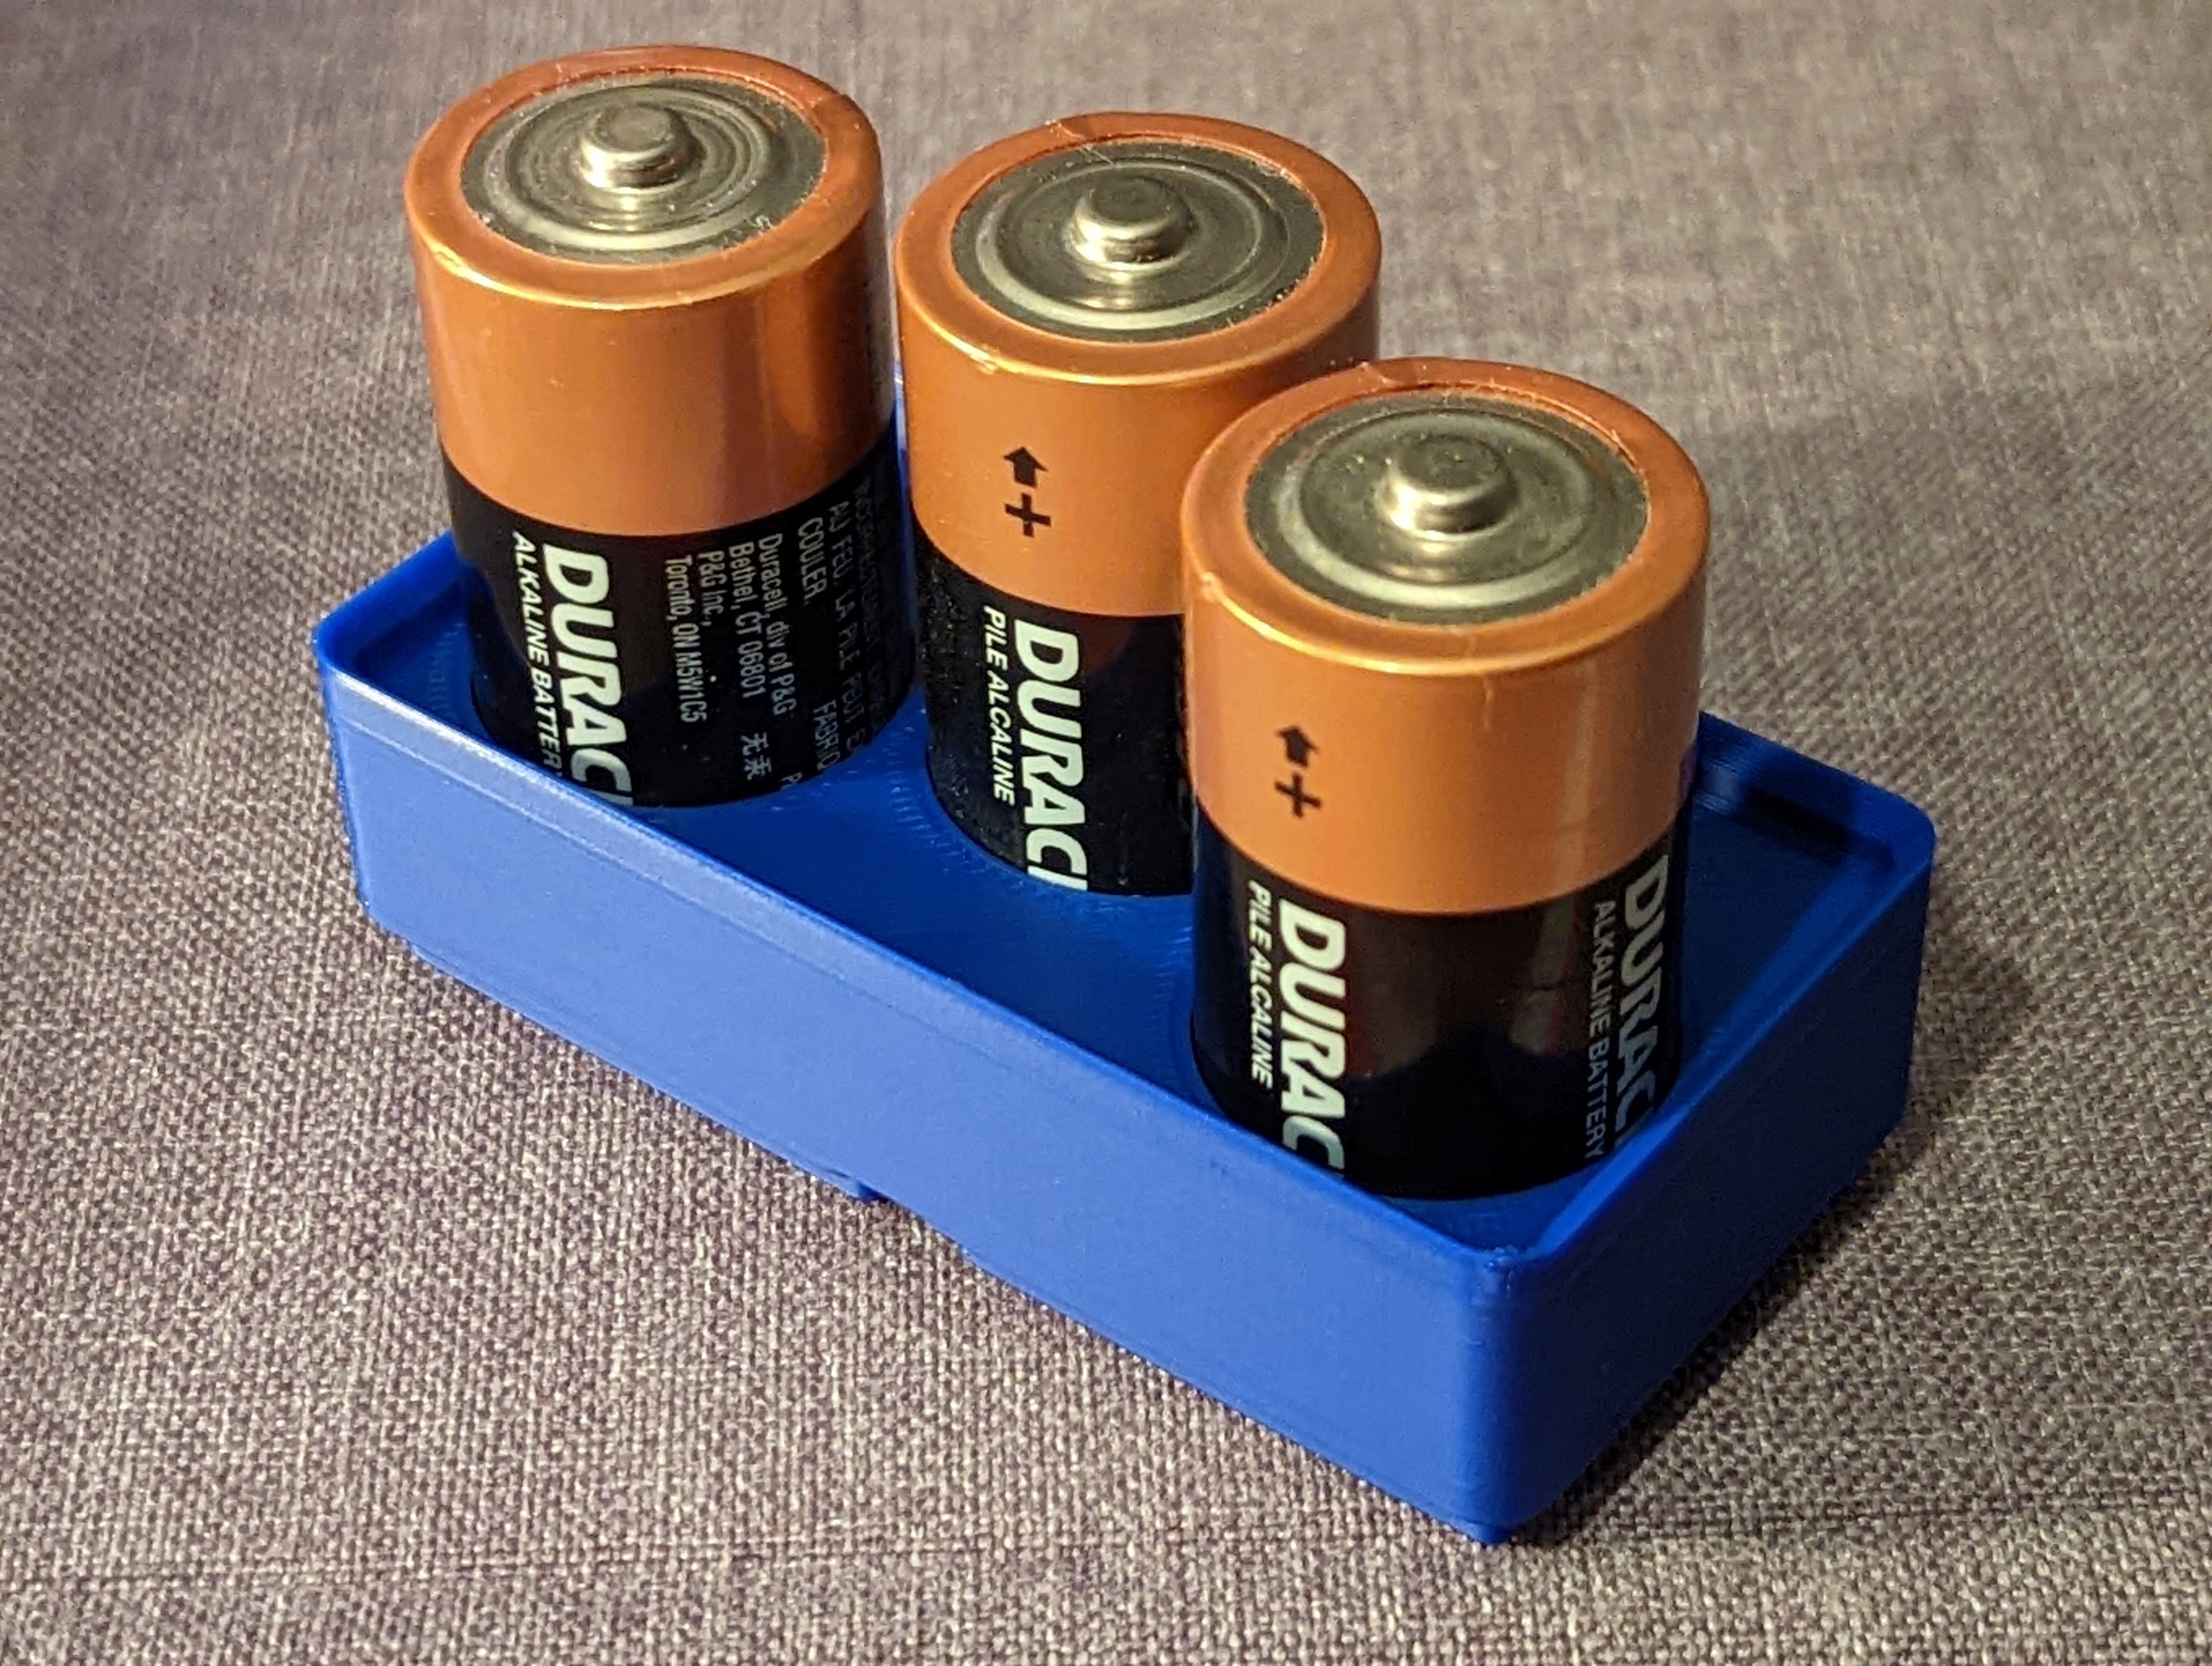 Gridfinity 1x2 C battery block